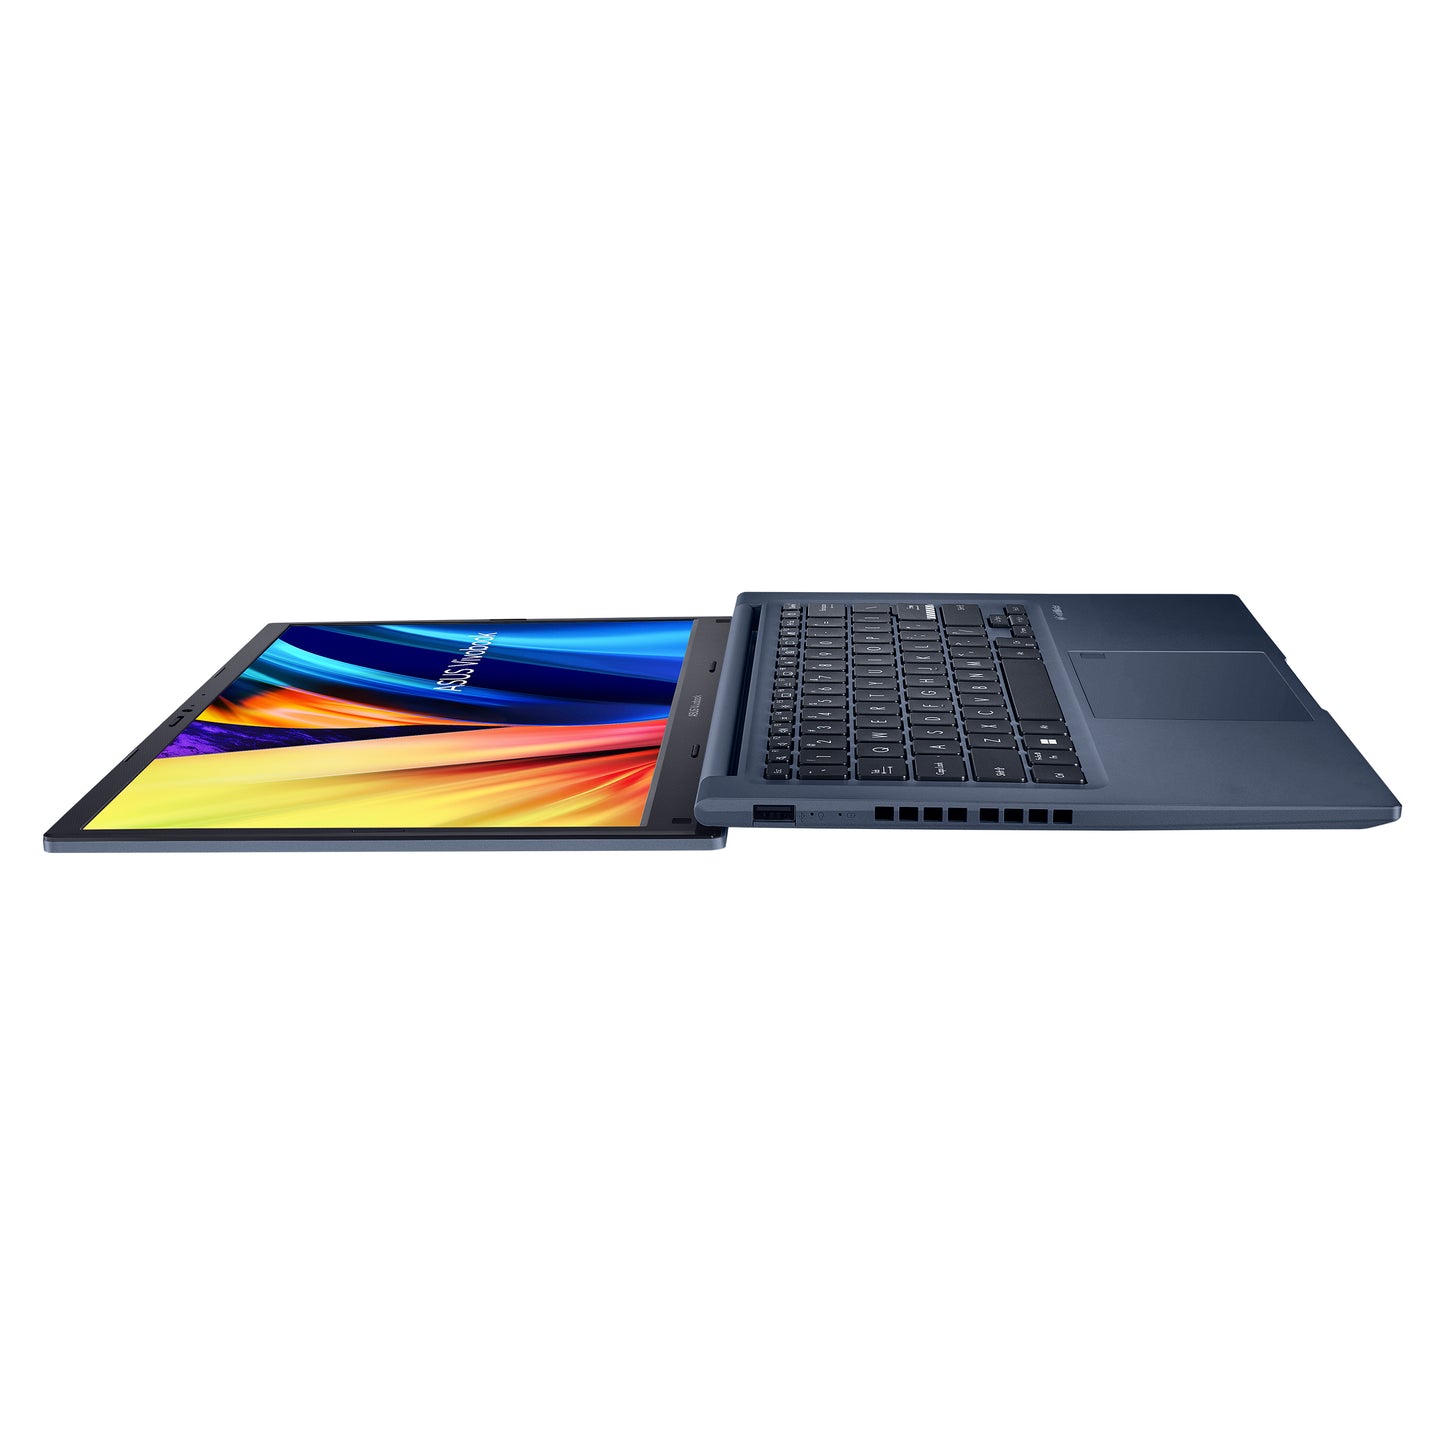 Asus Vivobook 14 M1402IA-IB56 Ryzen 5 4600h Vga Radeon 14" Laptop Offer (New OB)